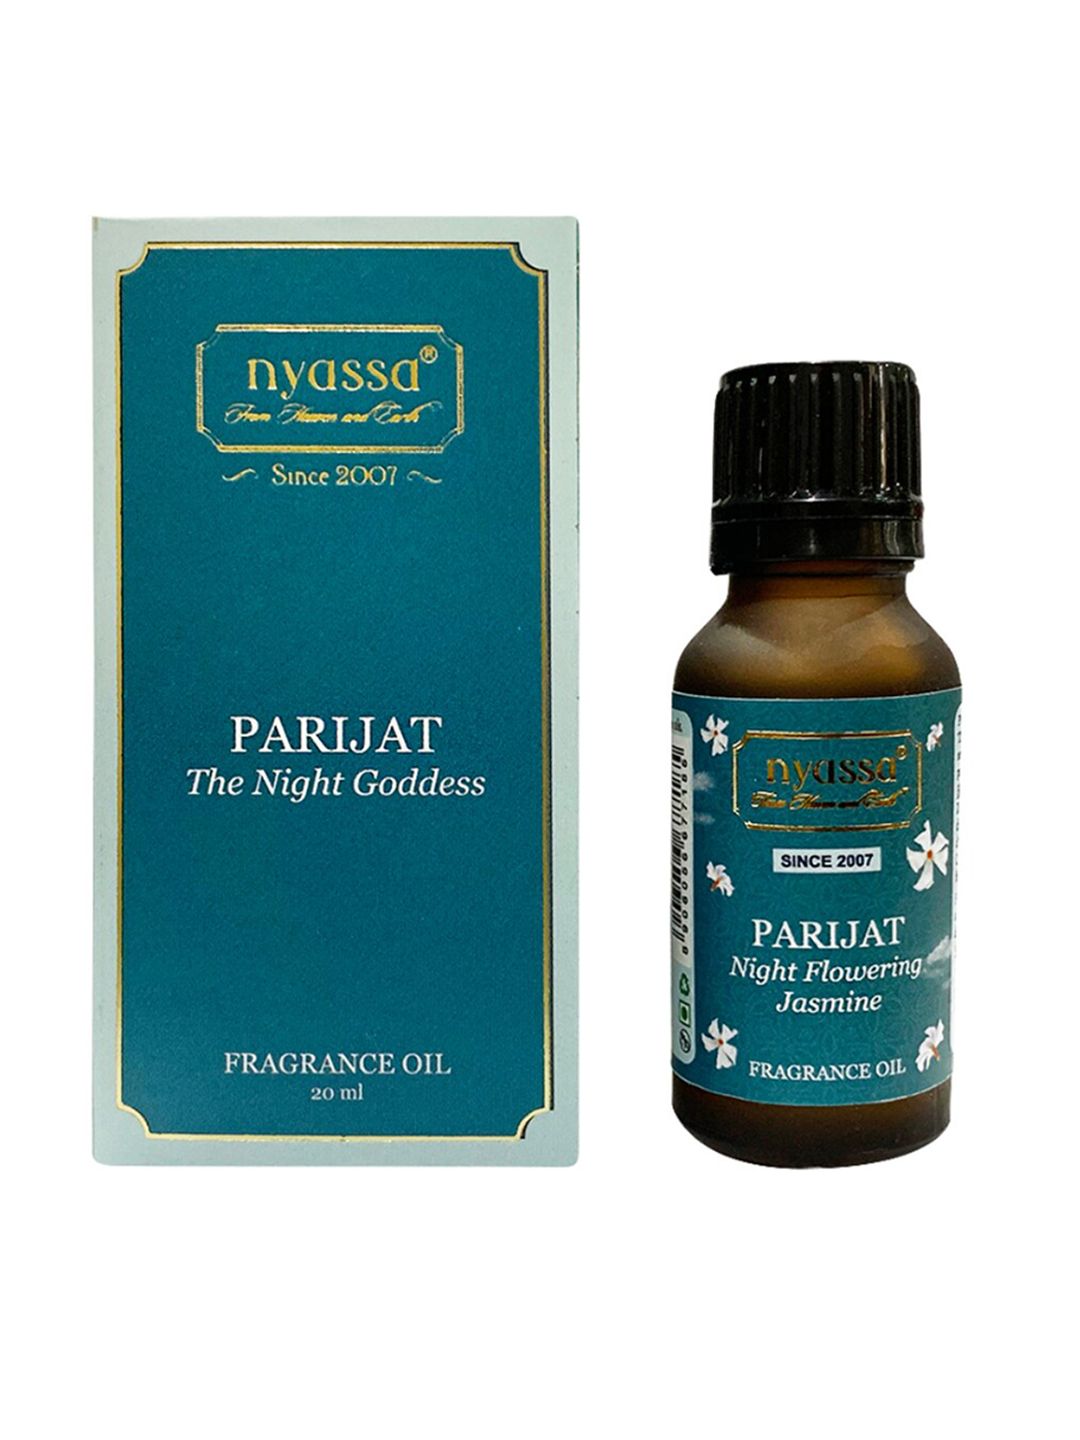 Nyassa Parijat The Night Goddess Jasmine Fragrance Oil - 20ml Price in India